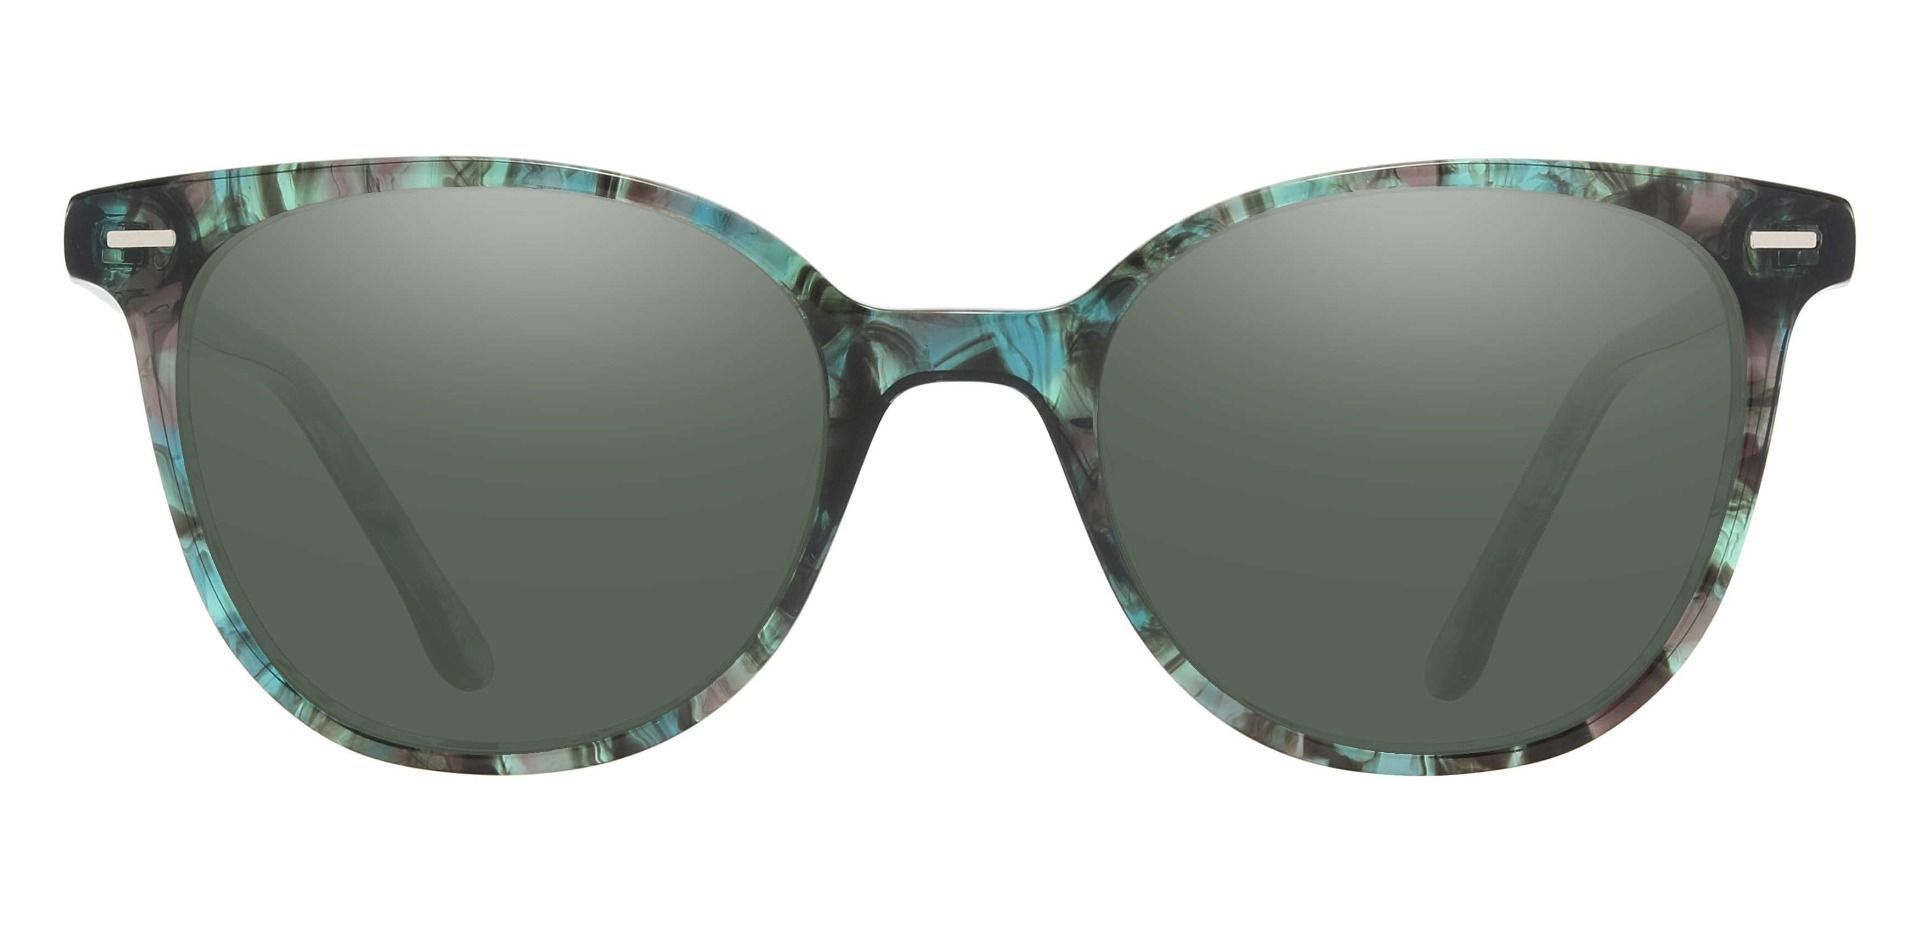 Chili Oval Prescription Sunglasses - Green Frame With Green Lenses